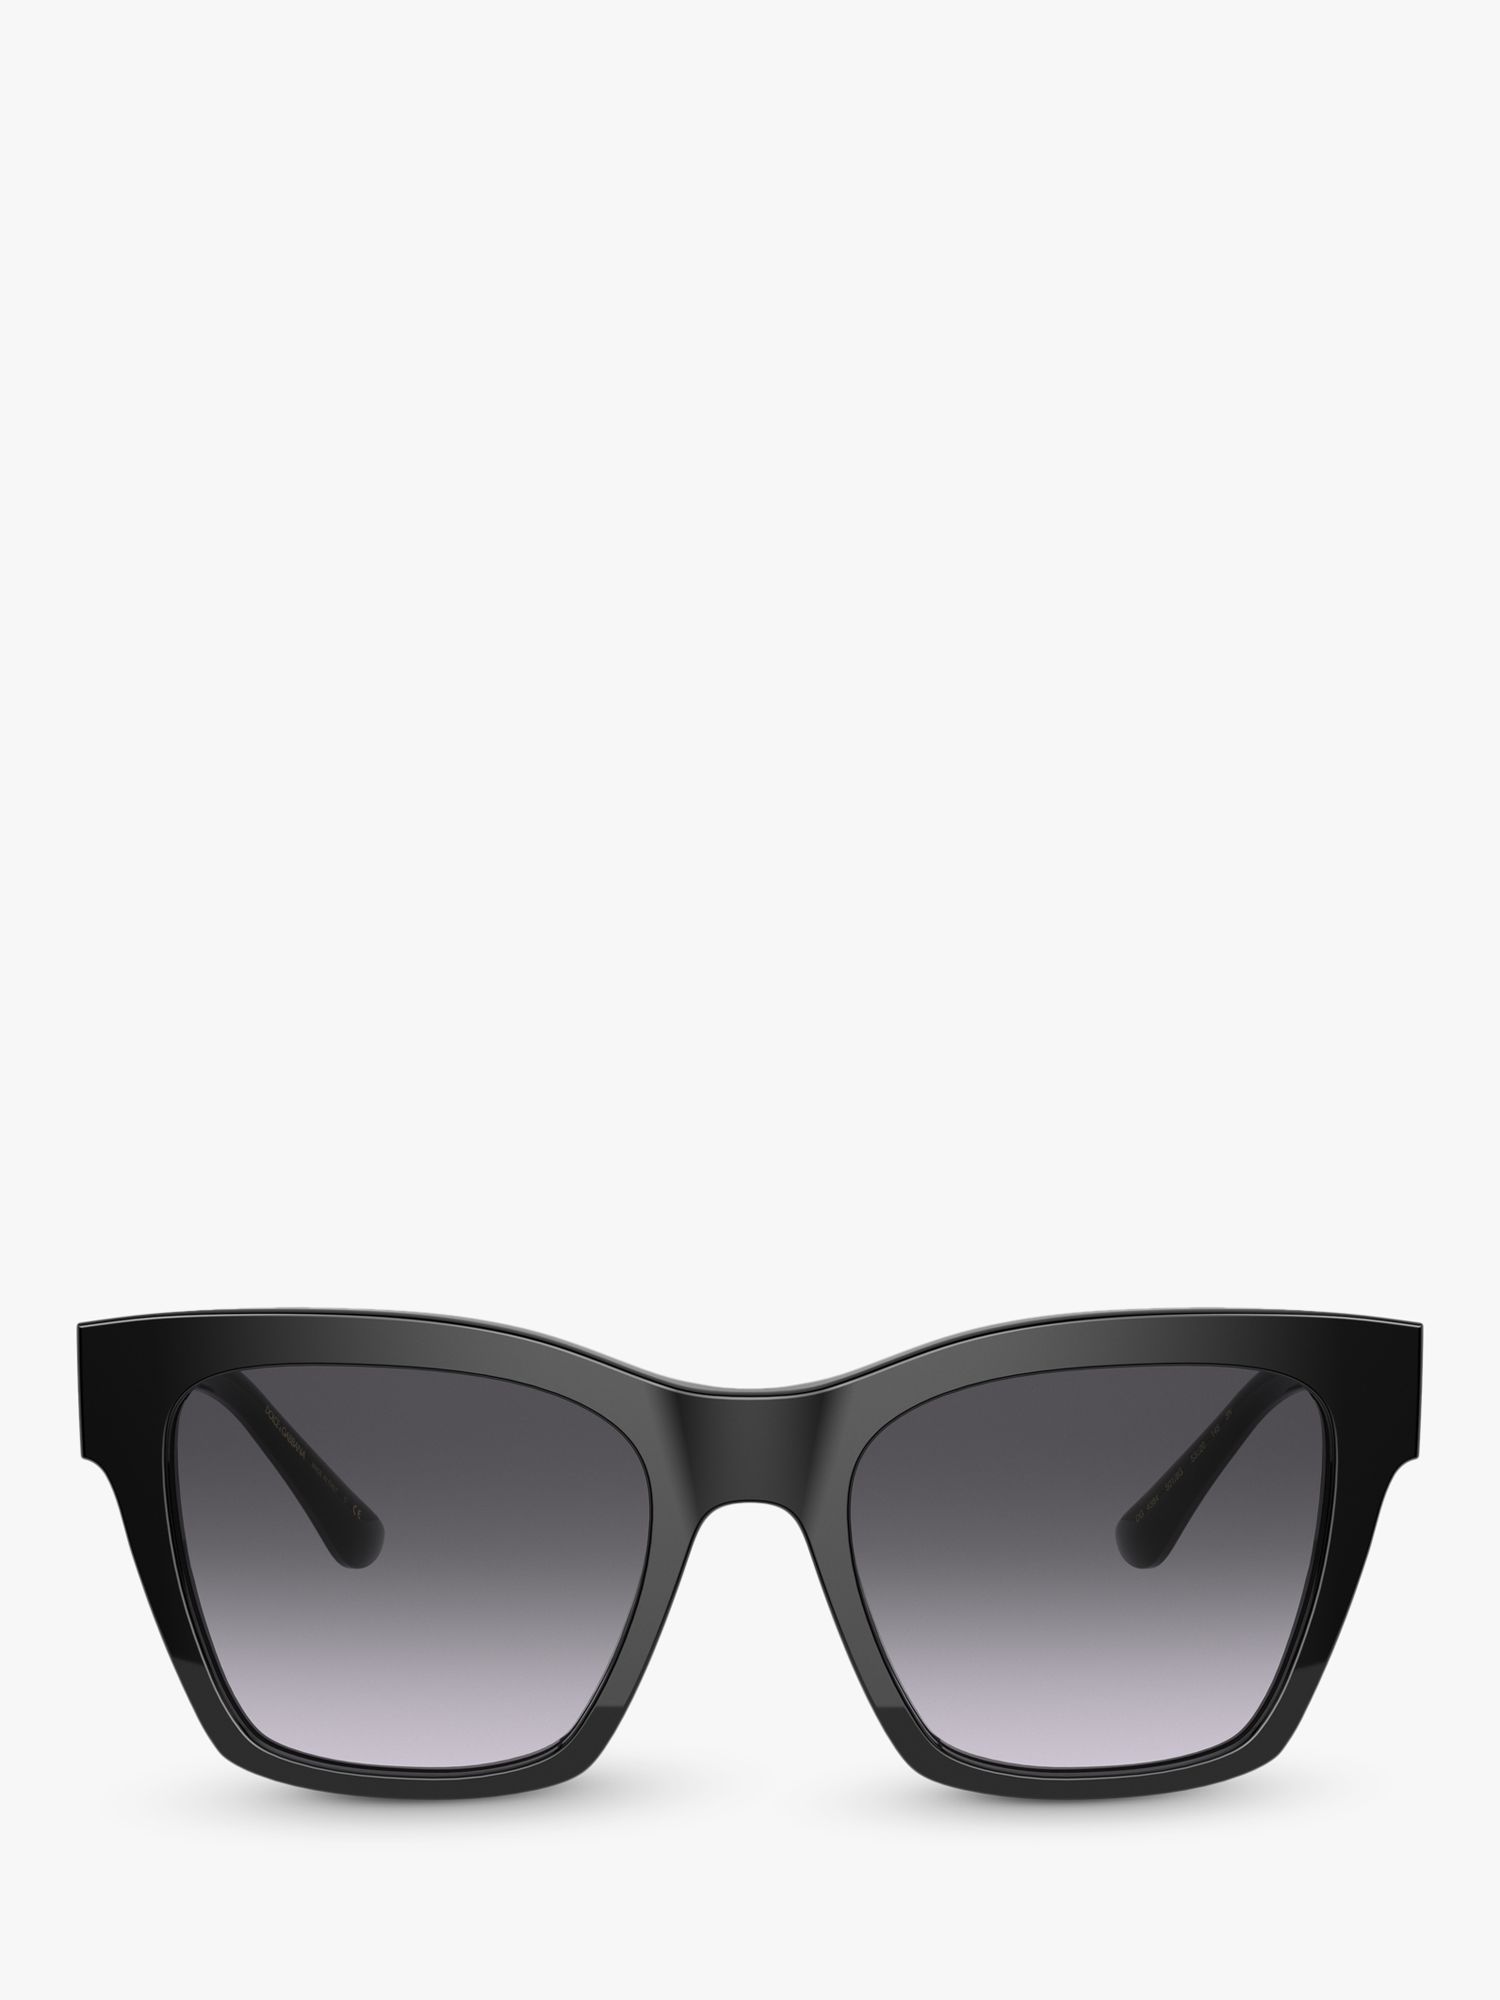 Dolce & Gabbana DG4384 Women's Square Sunglasses, Black/Grey Gradient ...